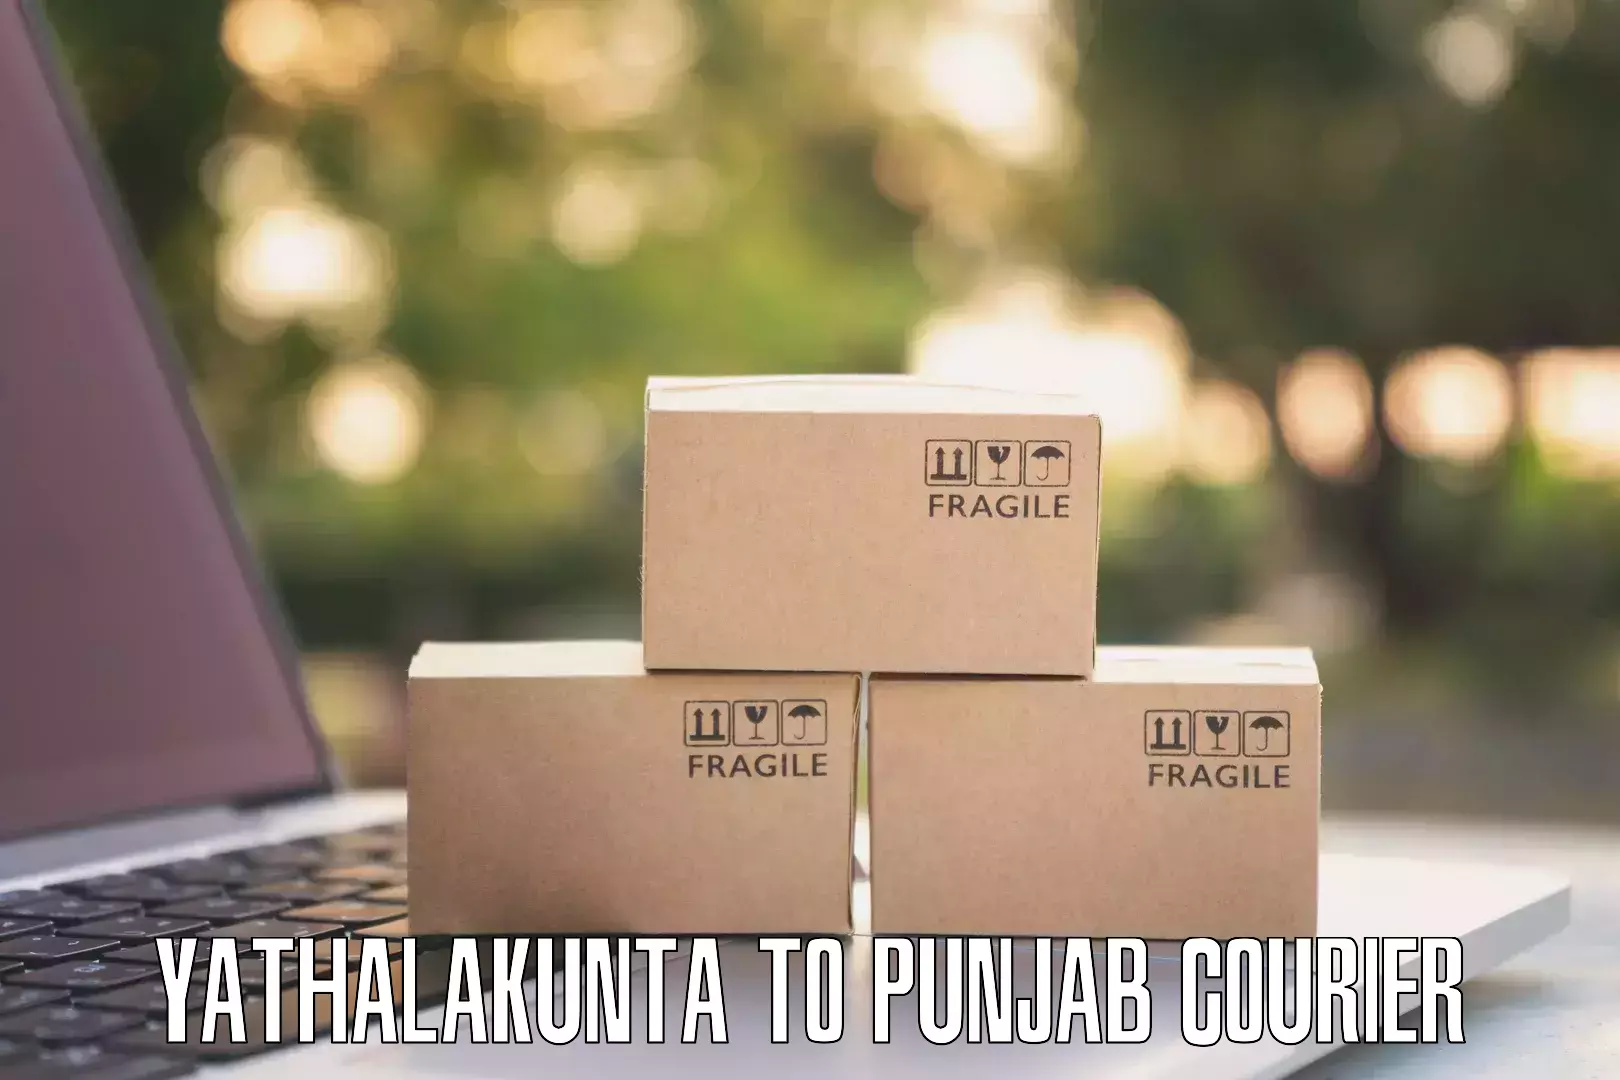 24-hour courier service Yathalakunta to Punjab